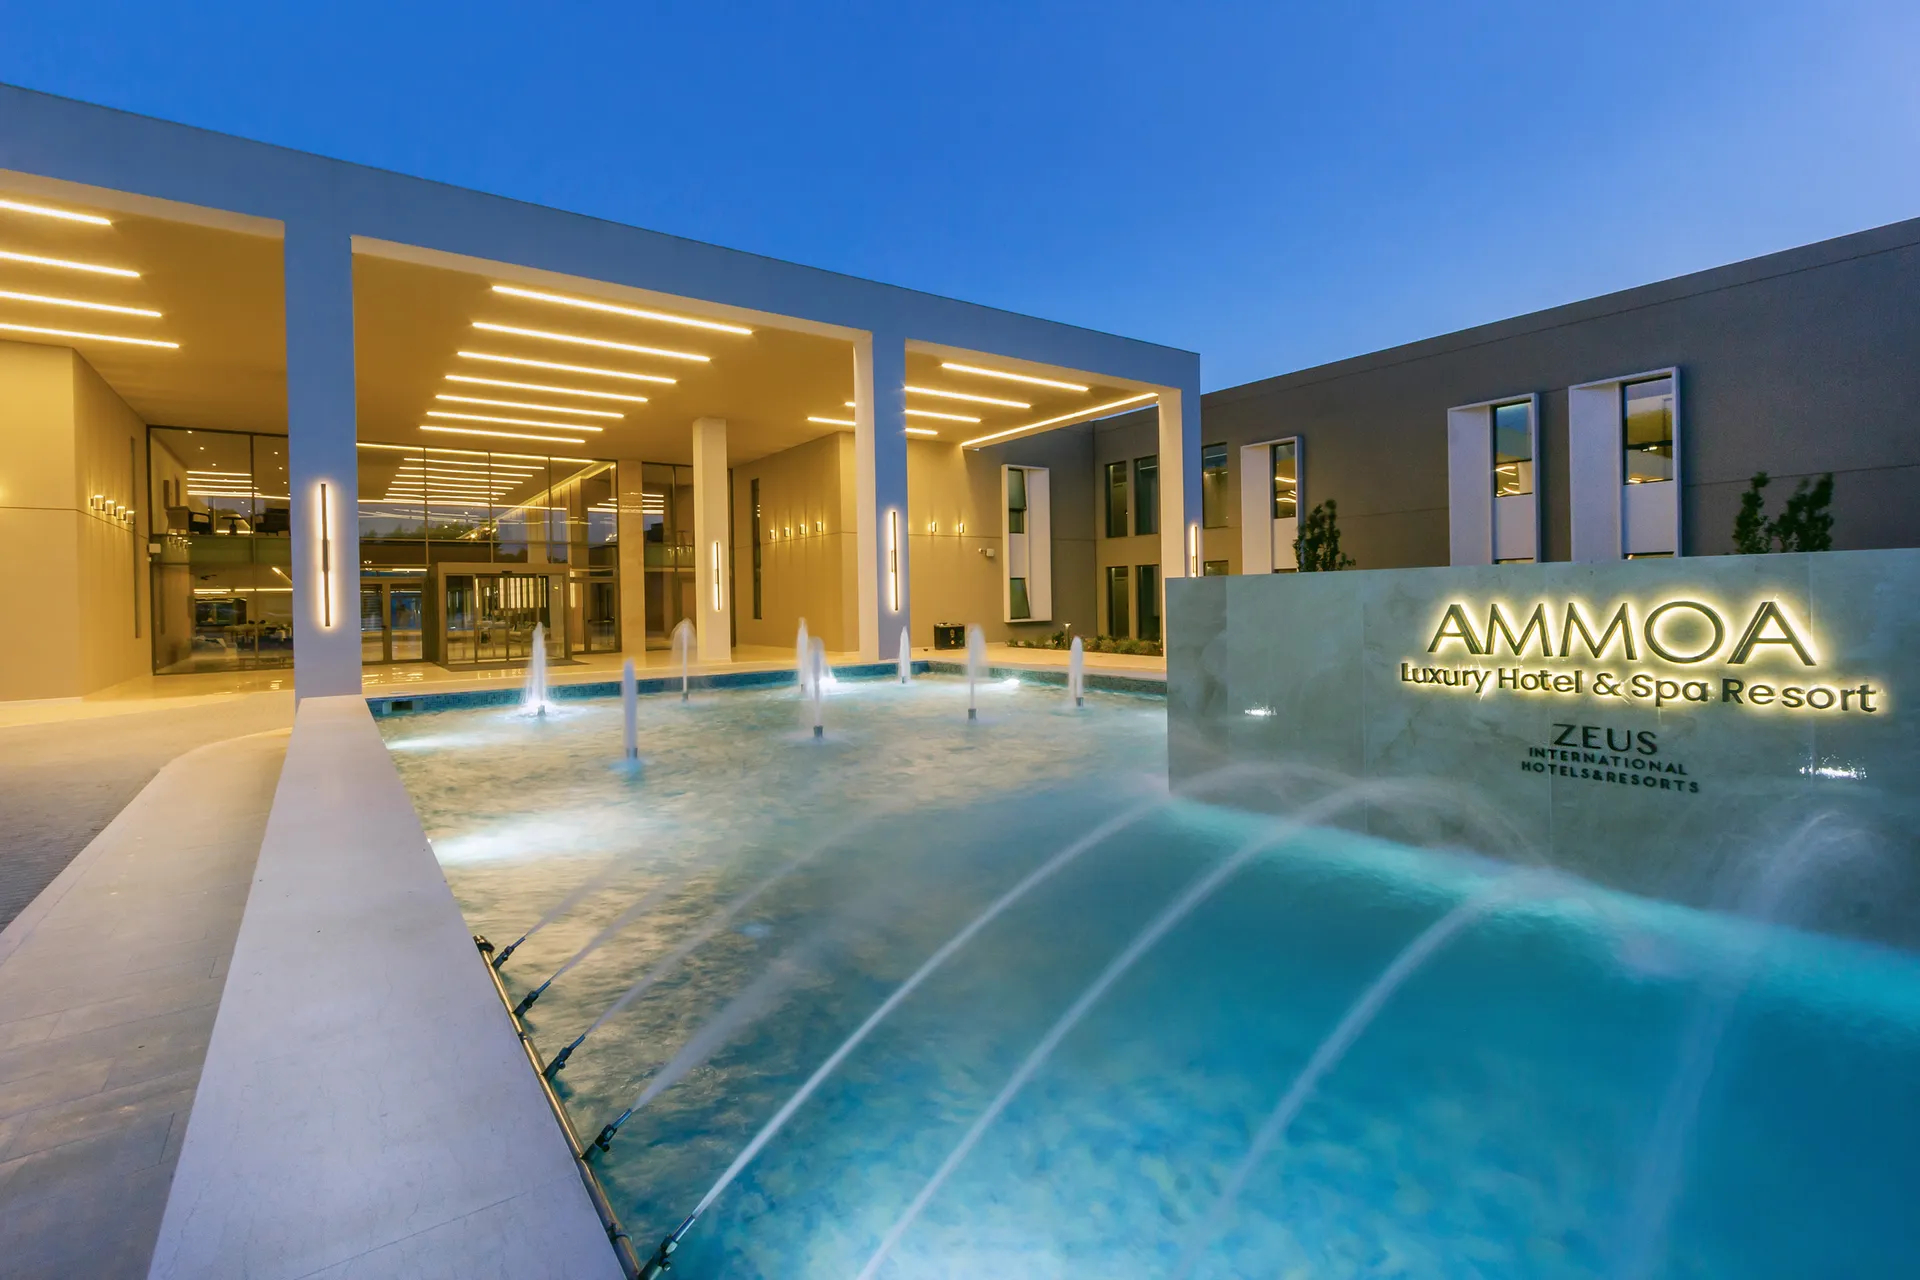 Ammoa Luxury Hotel & Spa hotel.jpg